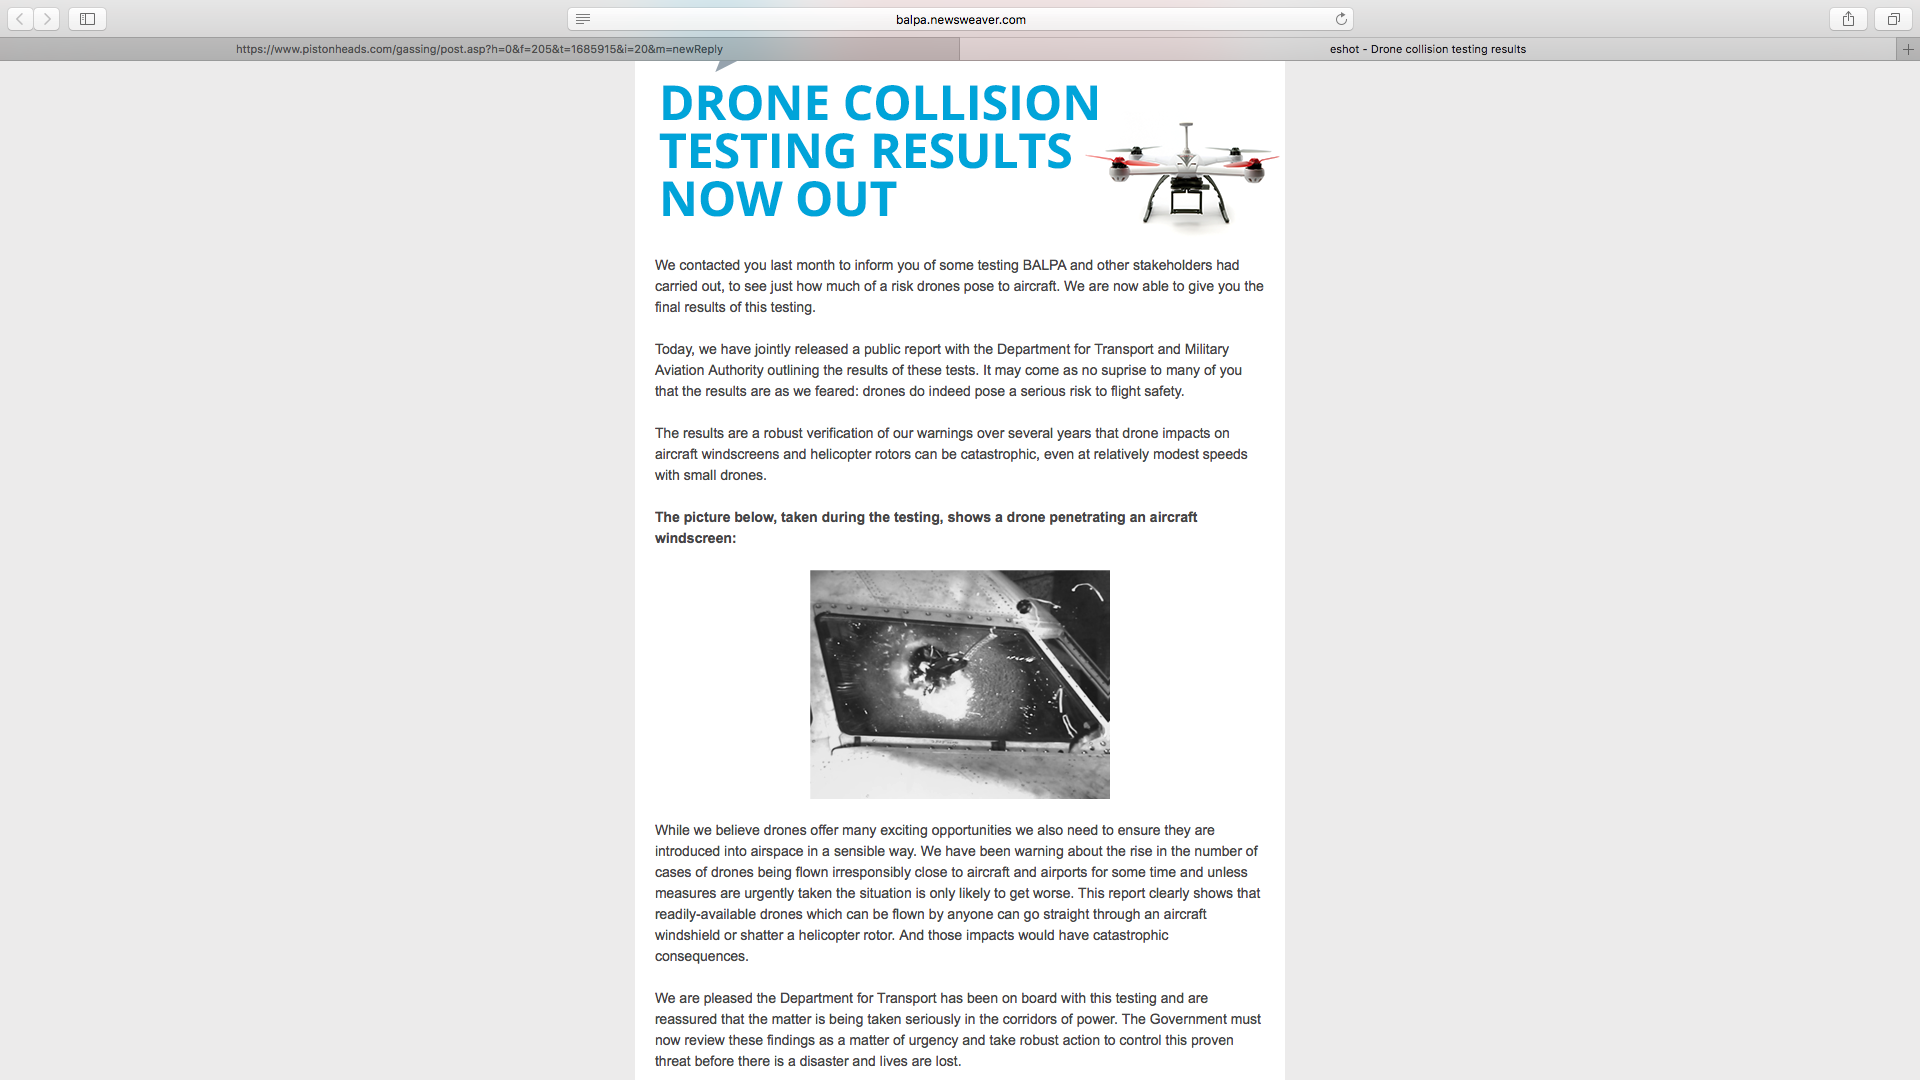 UK "Drone" registration on the way? - Page 2 - News, Politics & Economics - PistonHeads